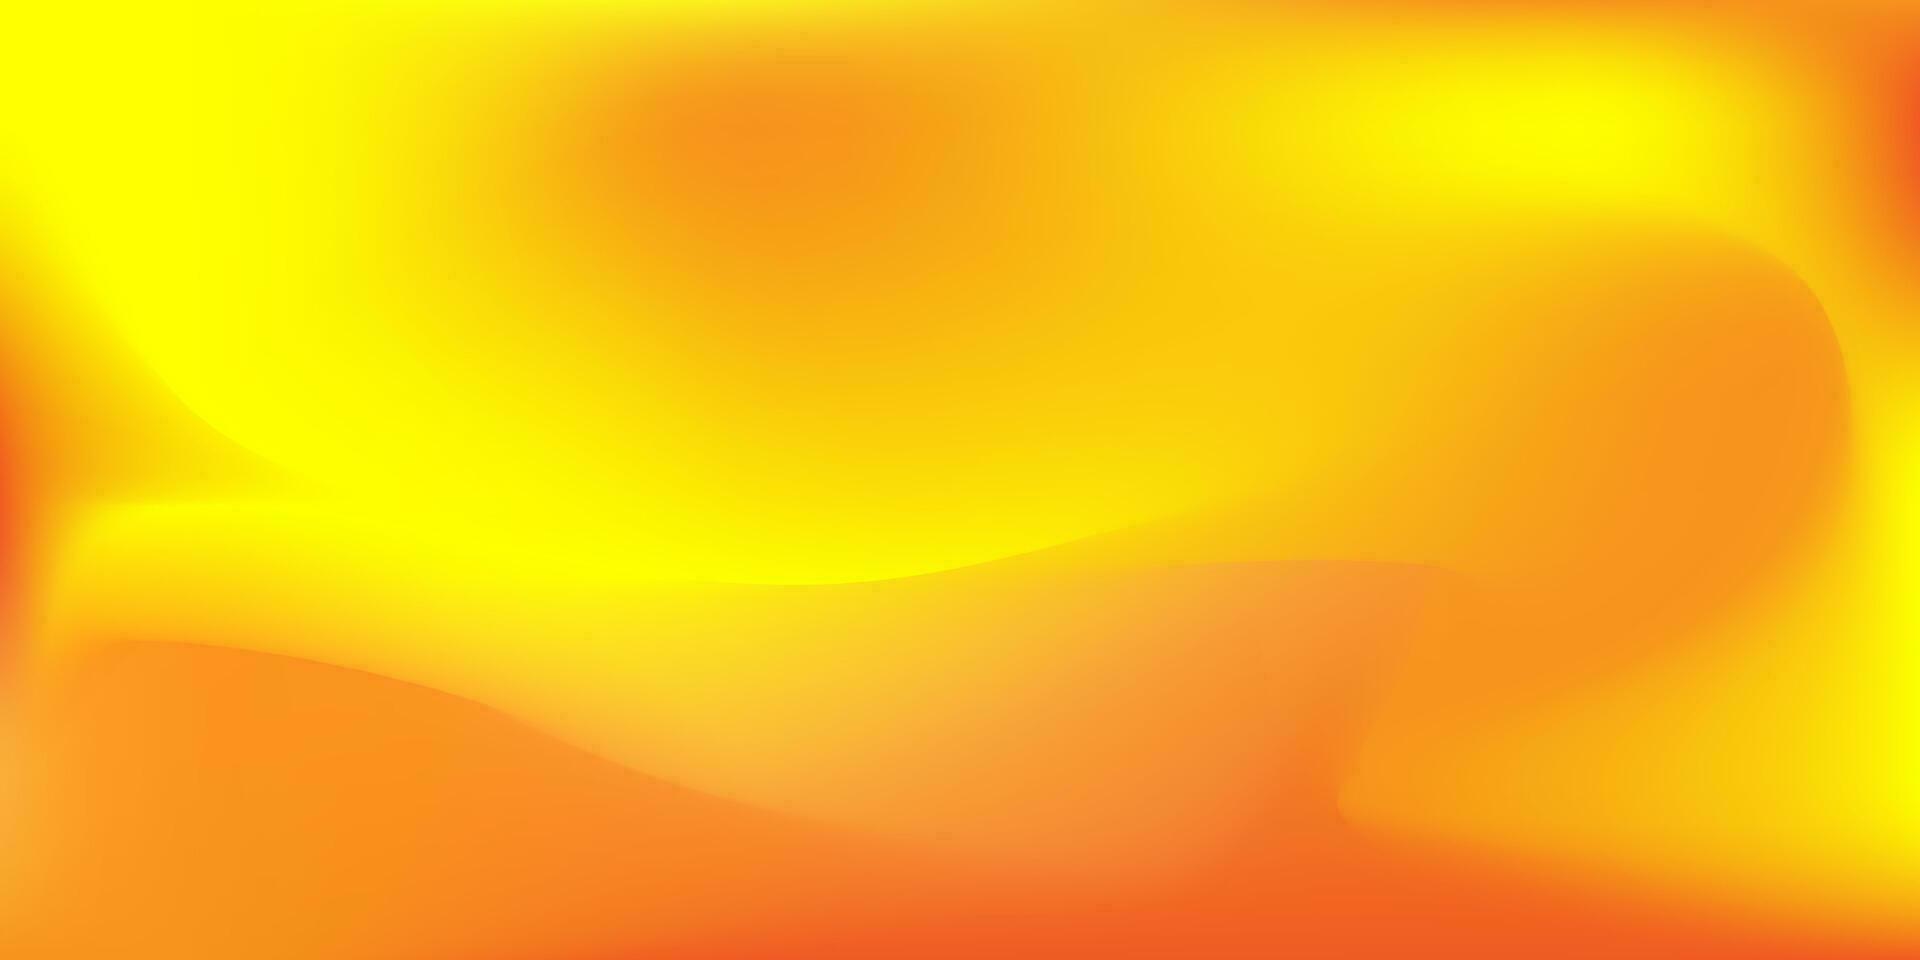 vetor abstrato brilhando amarelo alaranjado arco Iris fundo. horizontal bandeira. borrado gradiente modelo. eps10 vetor